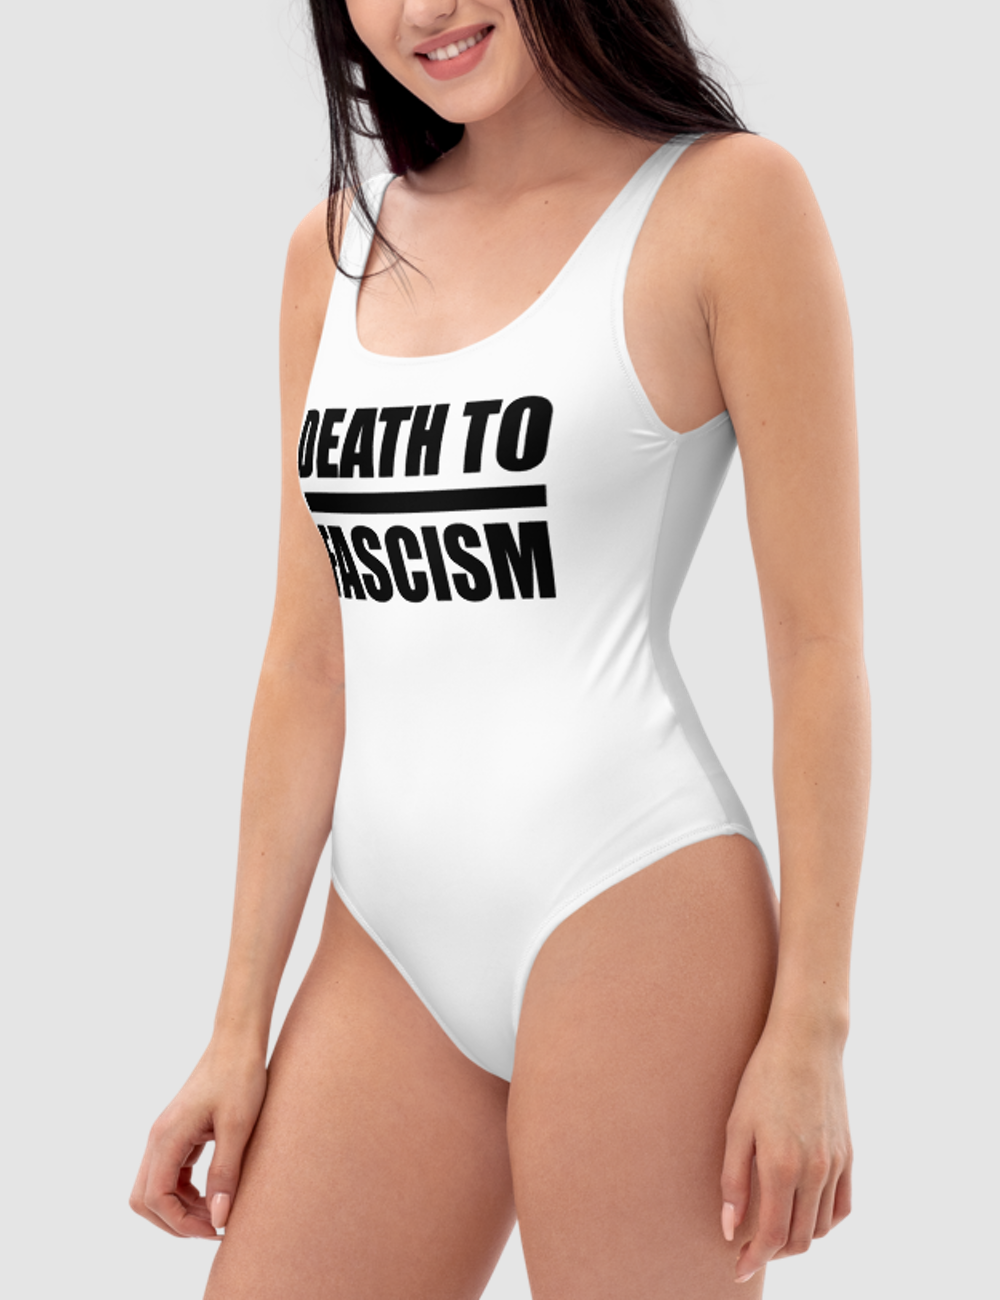 Death To Fascism | Women's One-Piece Swimsuit OniTakai